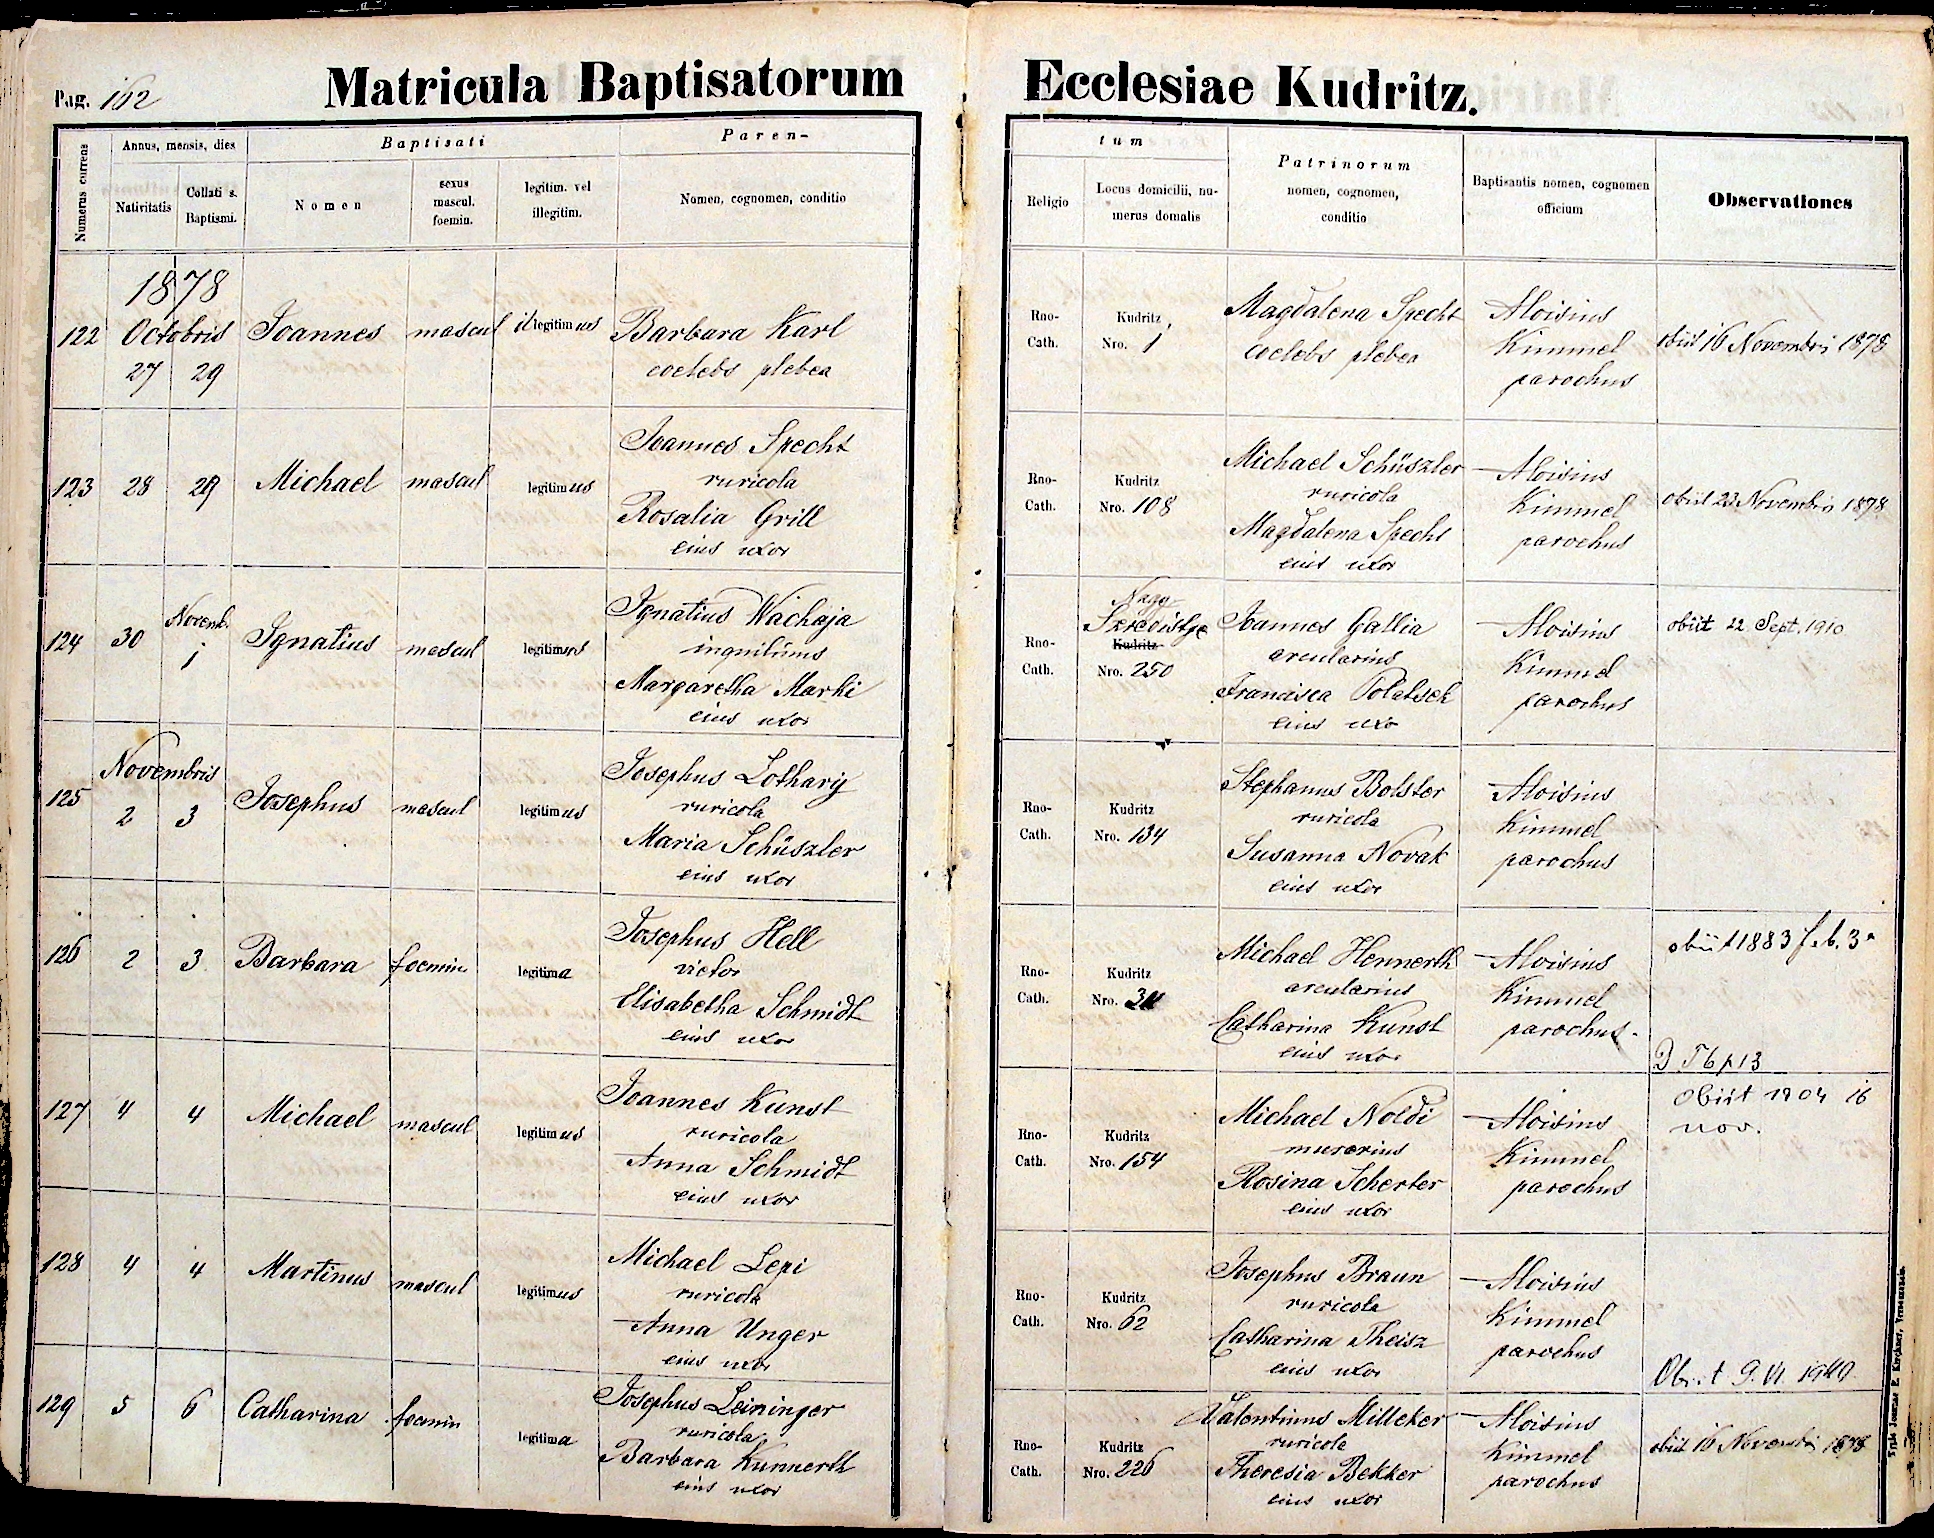 images/church_records/BIRTHS/1870-1879B/1878/162